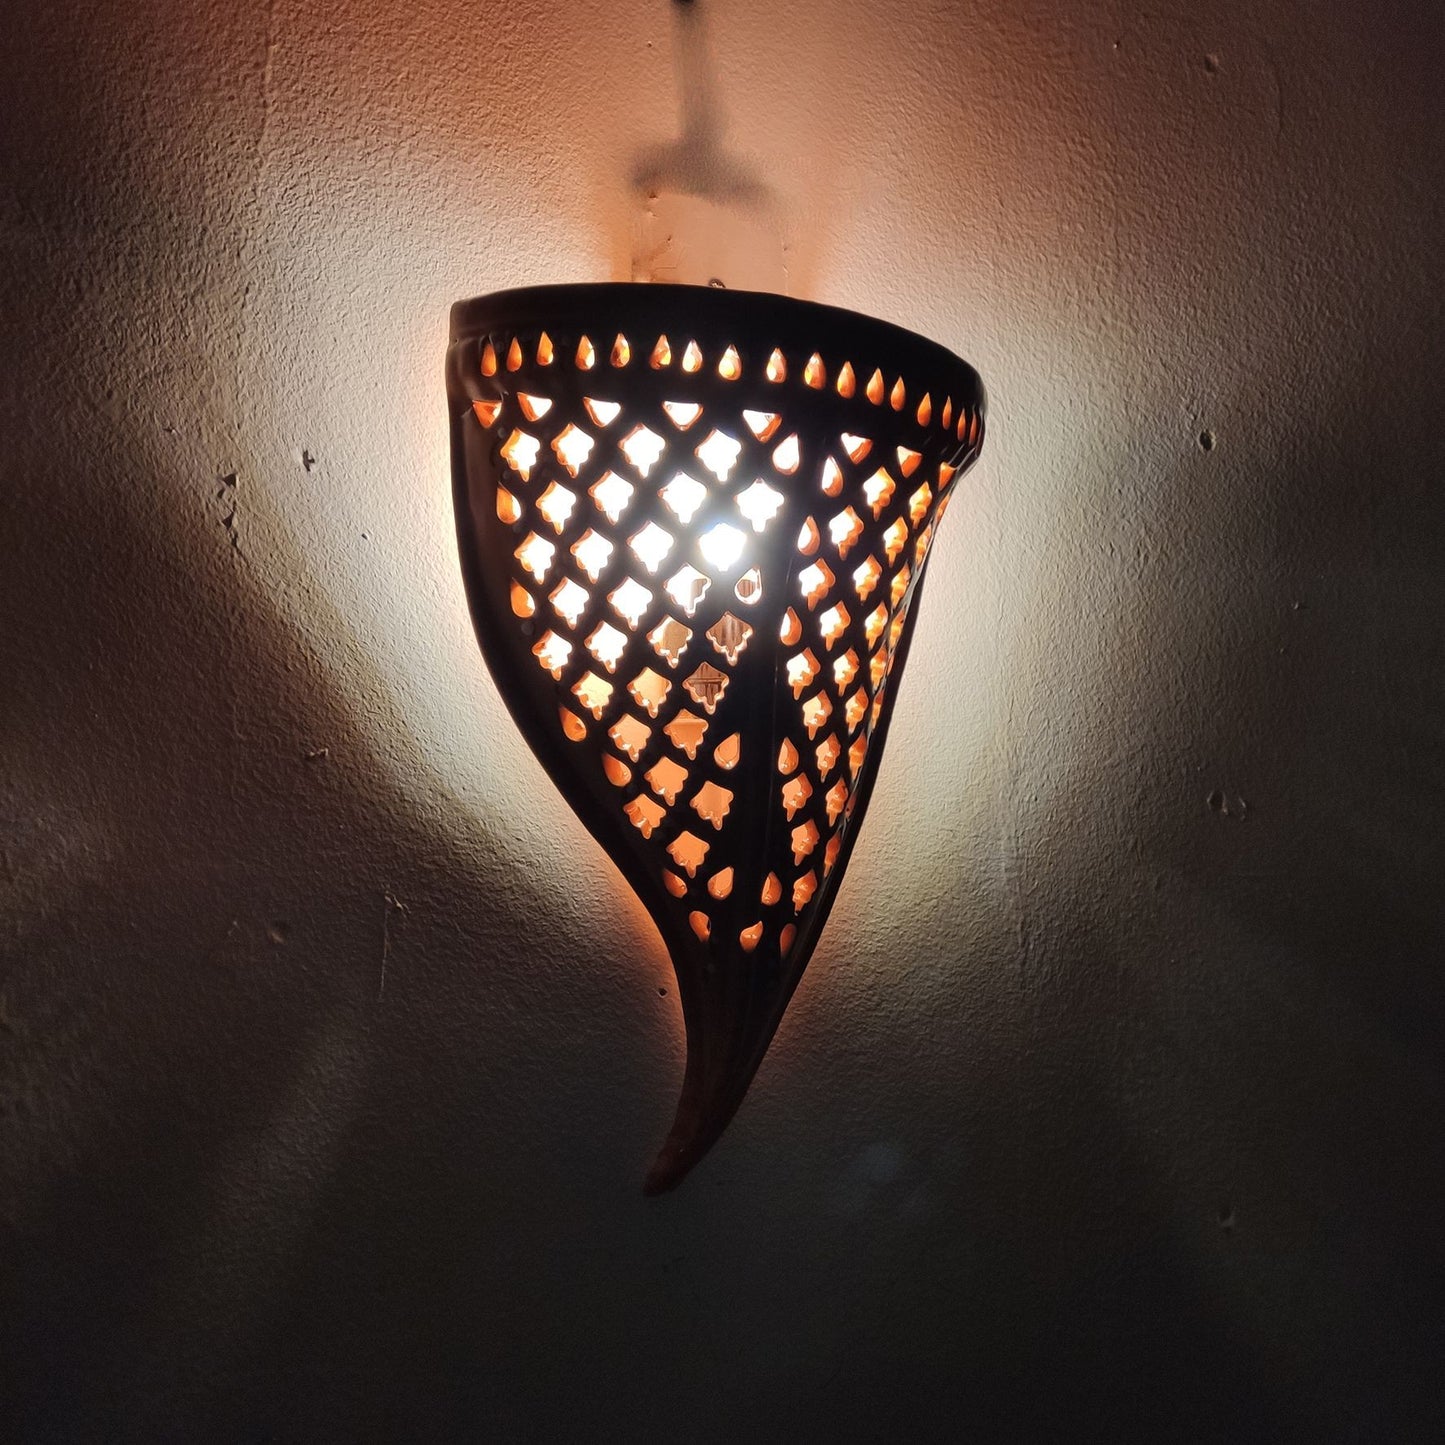 Arredo Etnico Applique Parete Lampada Ceramica Tunisina Marocchina 2411201206